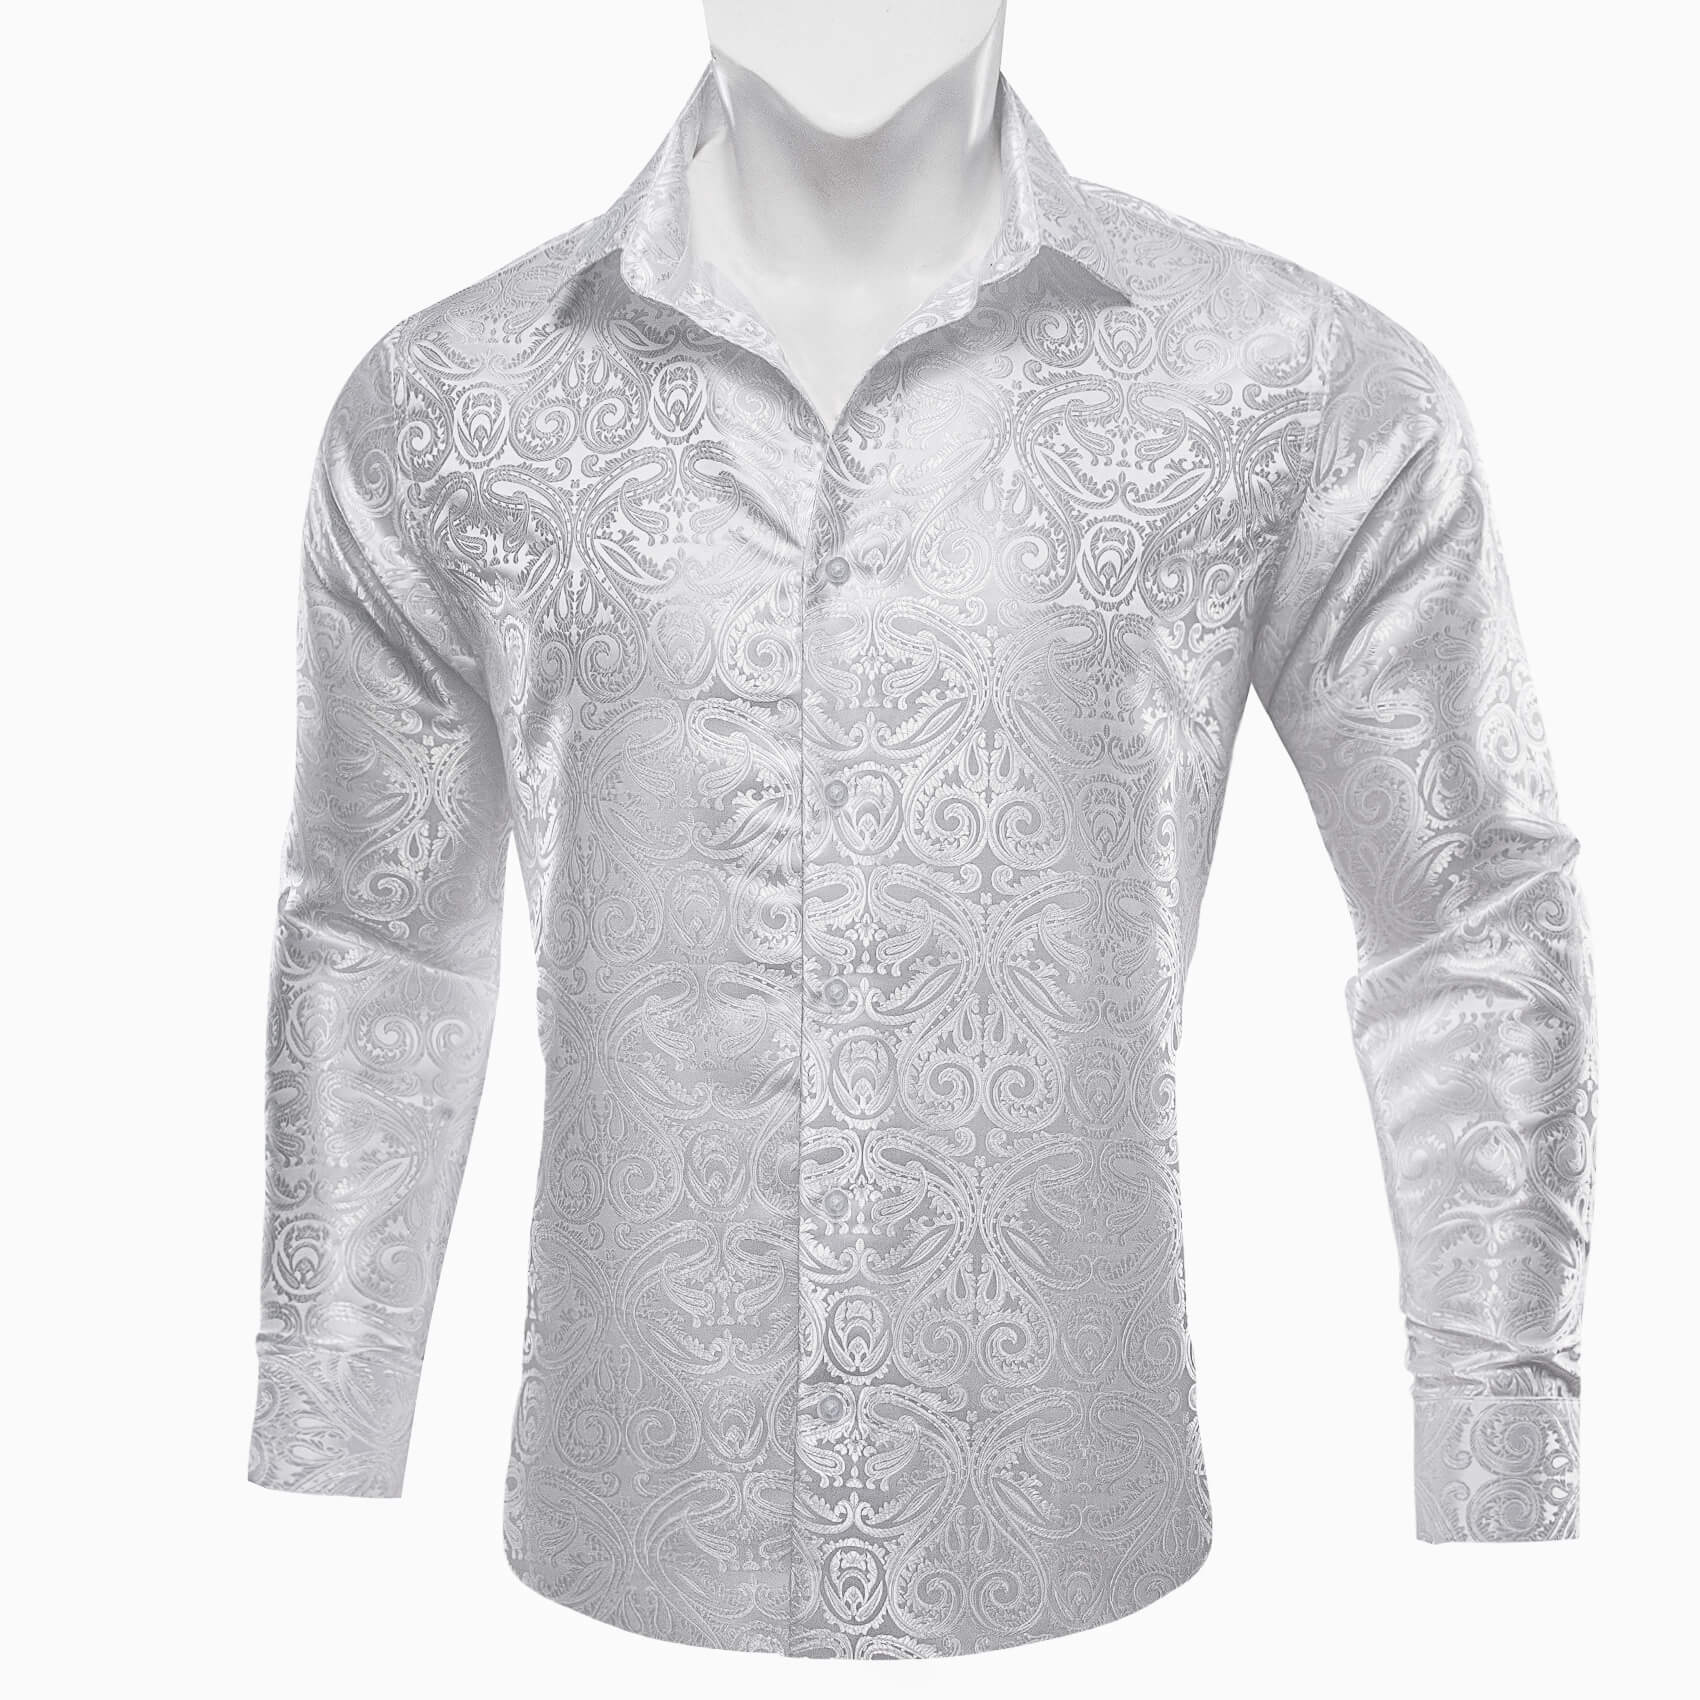 Barry Wang Button Down Shirt White Paisley Men's Silk Long Sleeve Shirt New Arrival